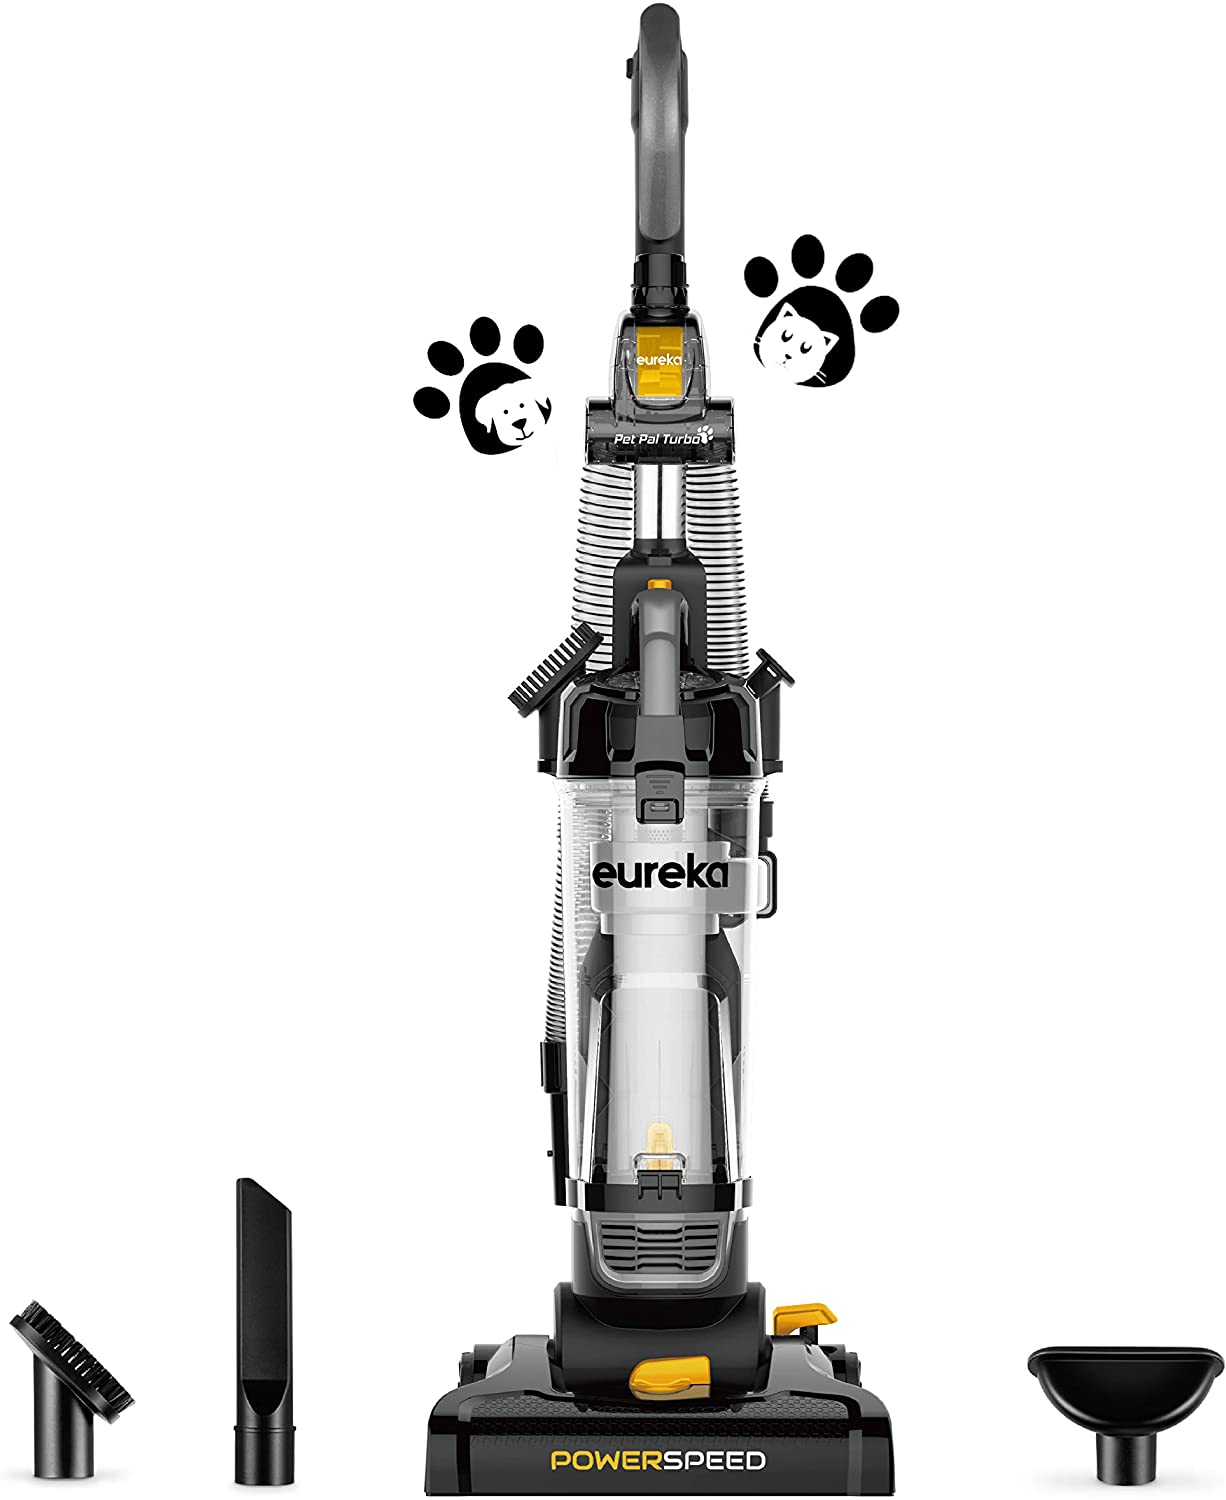 Eureka PowerSpeed Bagless Upright Vacuum Cleaner, Pet Turbo, Black - image 1 of 5